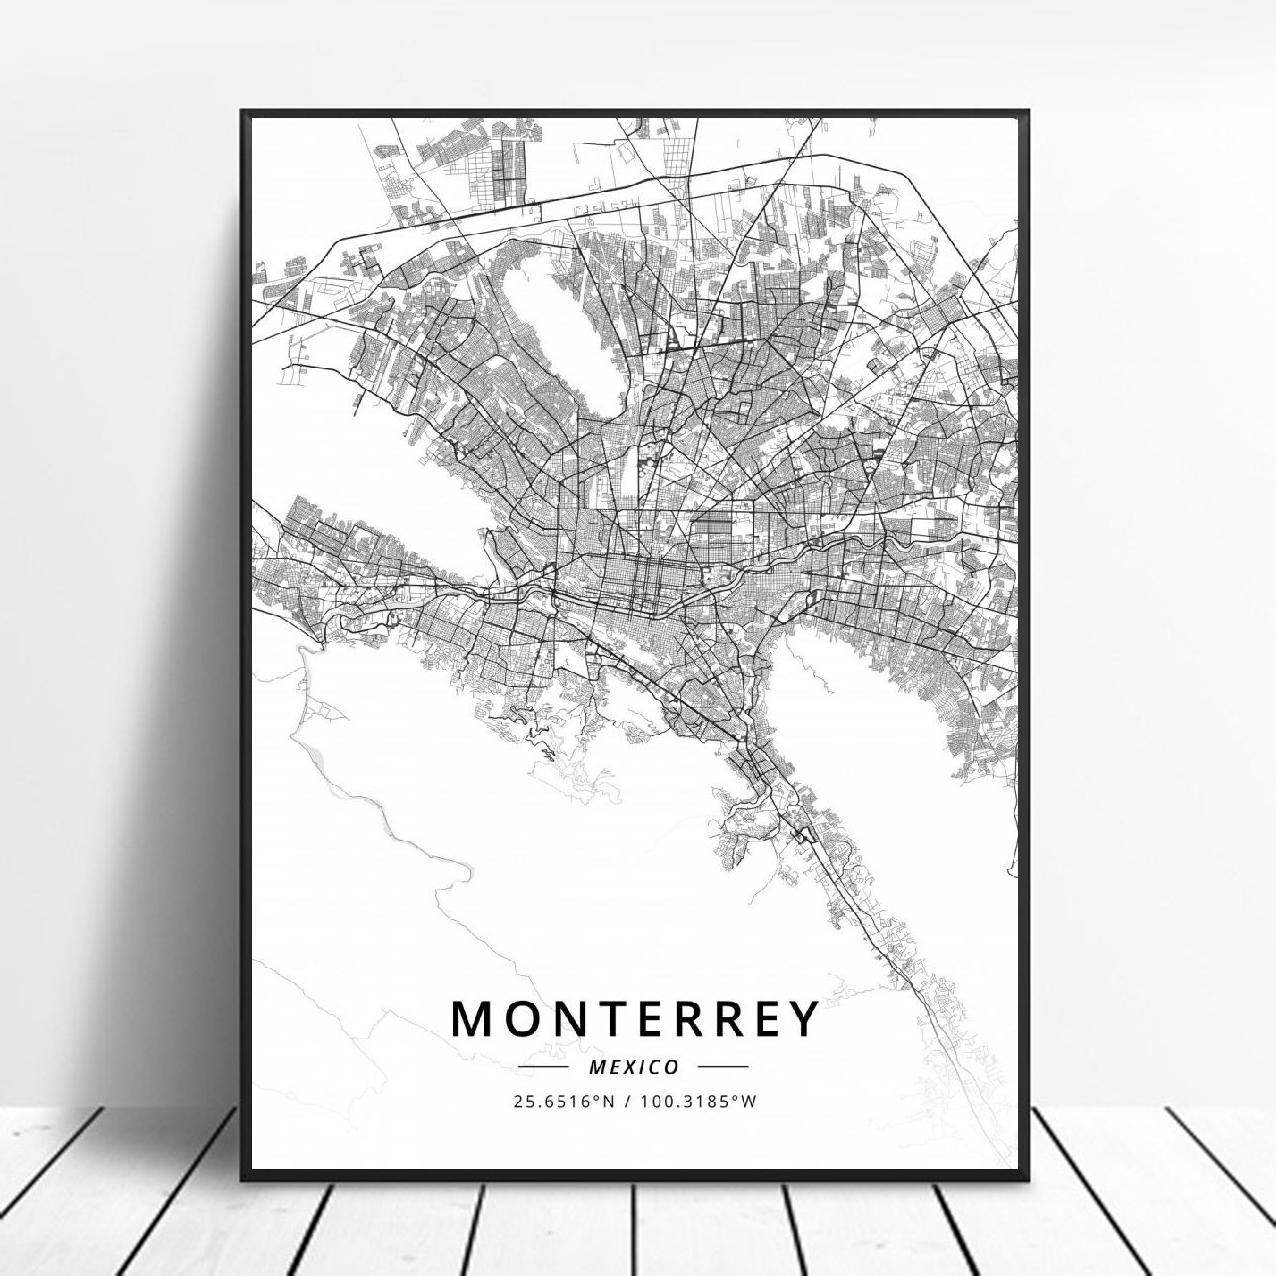 Monterrey Reynosa Mexicali Lopez Mateos Puebla City Zapopan Mexico Map Poster